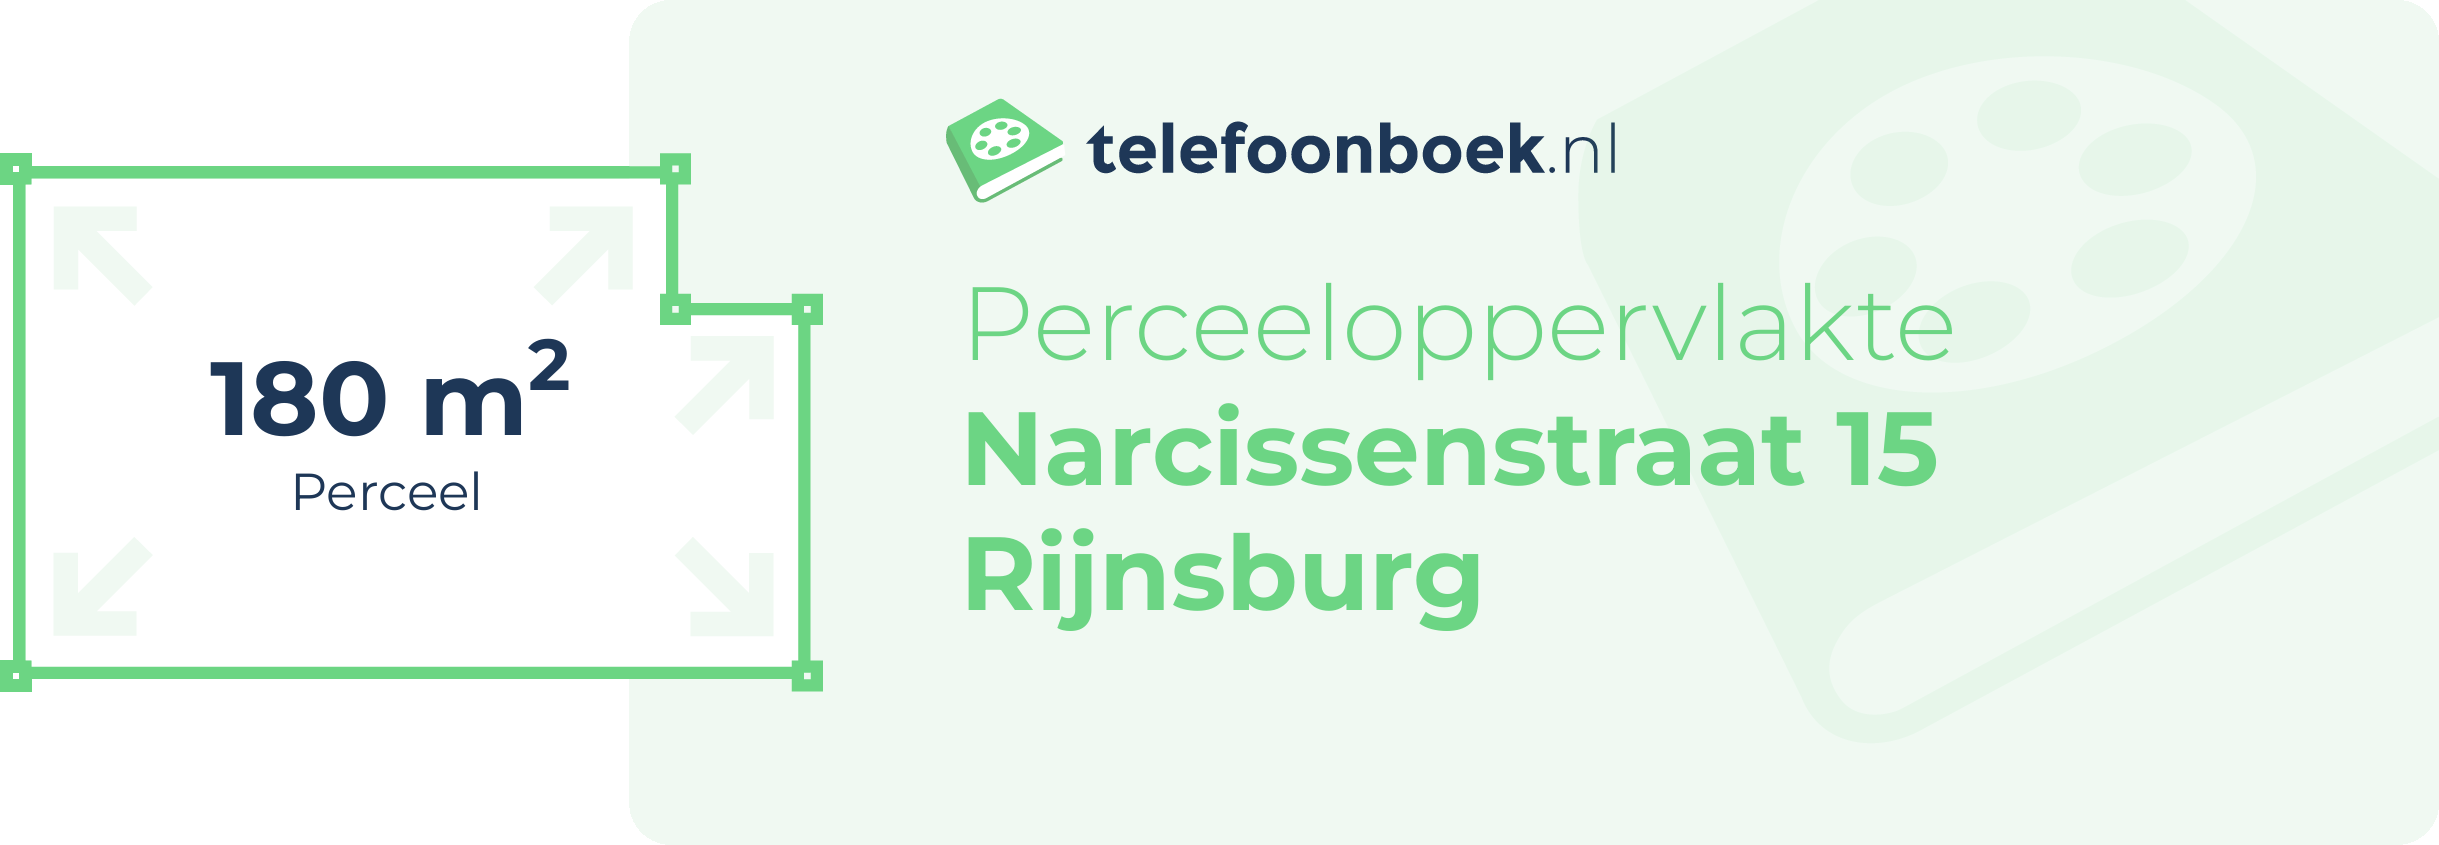 Perceeloppervlakte Narcissenstraat 15 Rijnsburg